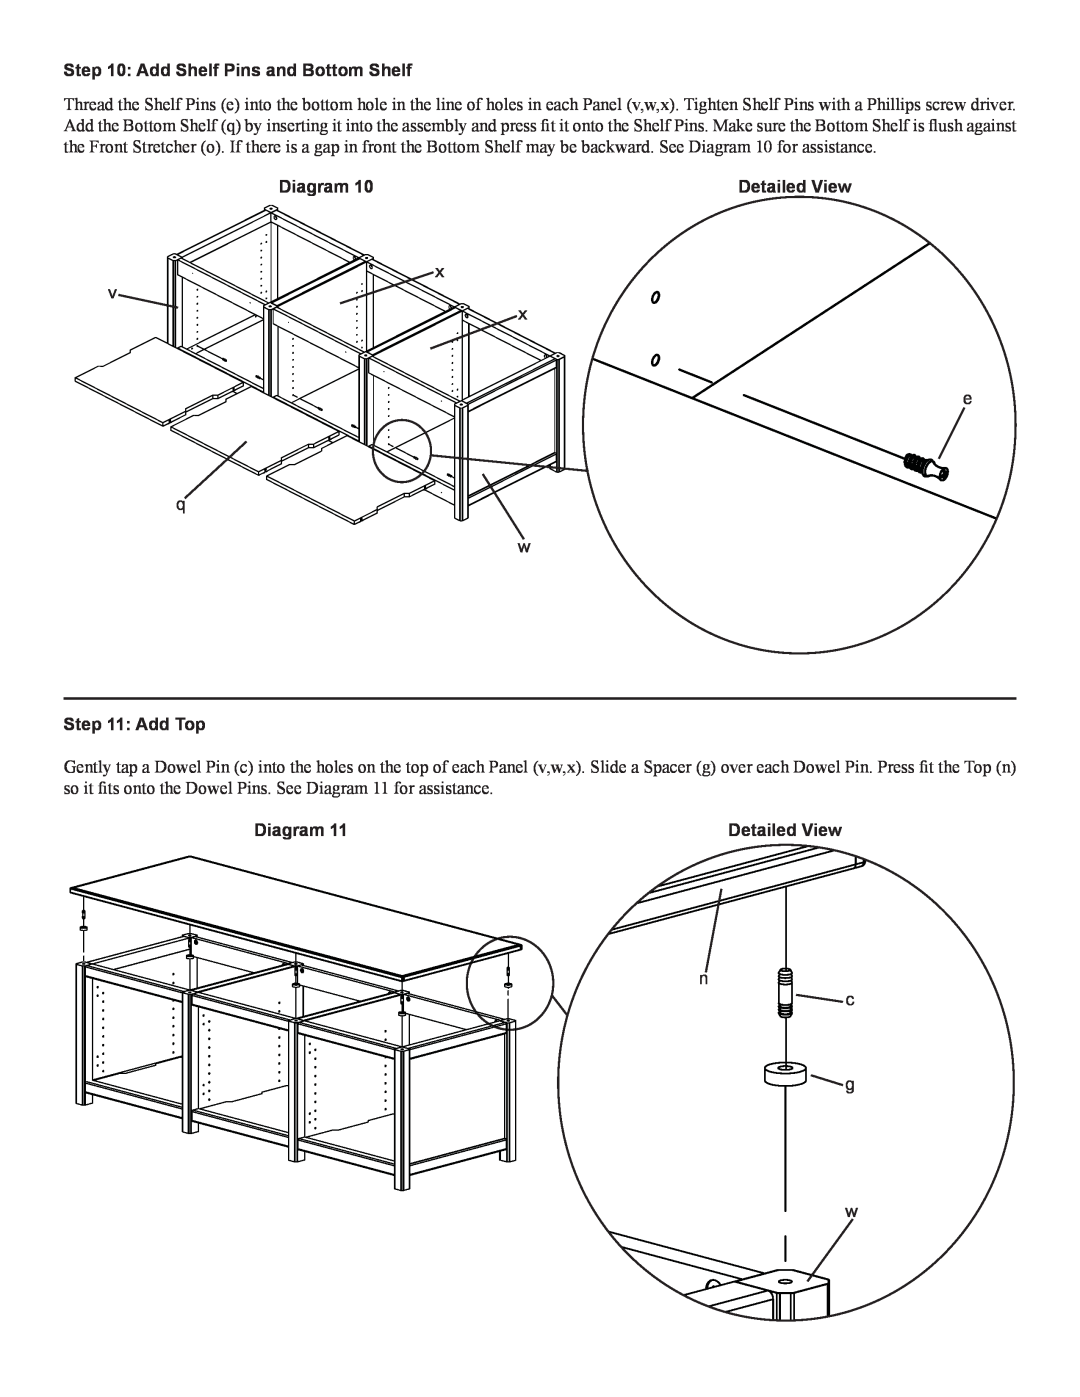 Sanus Systems WFV66 manual Add Shelf Pins and Bottom Shelf, x v x e q w, Add Top, n c g, Diagram 